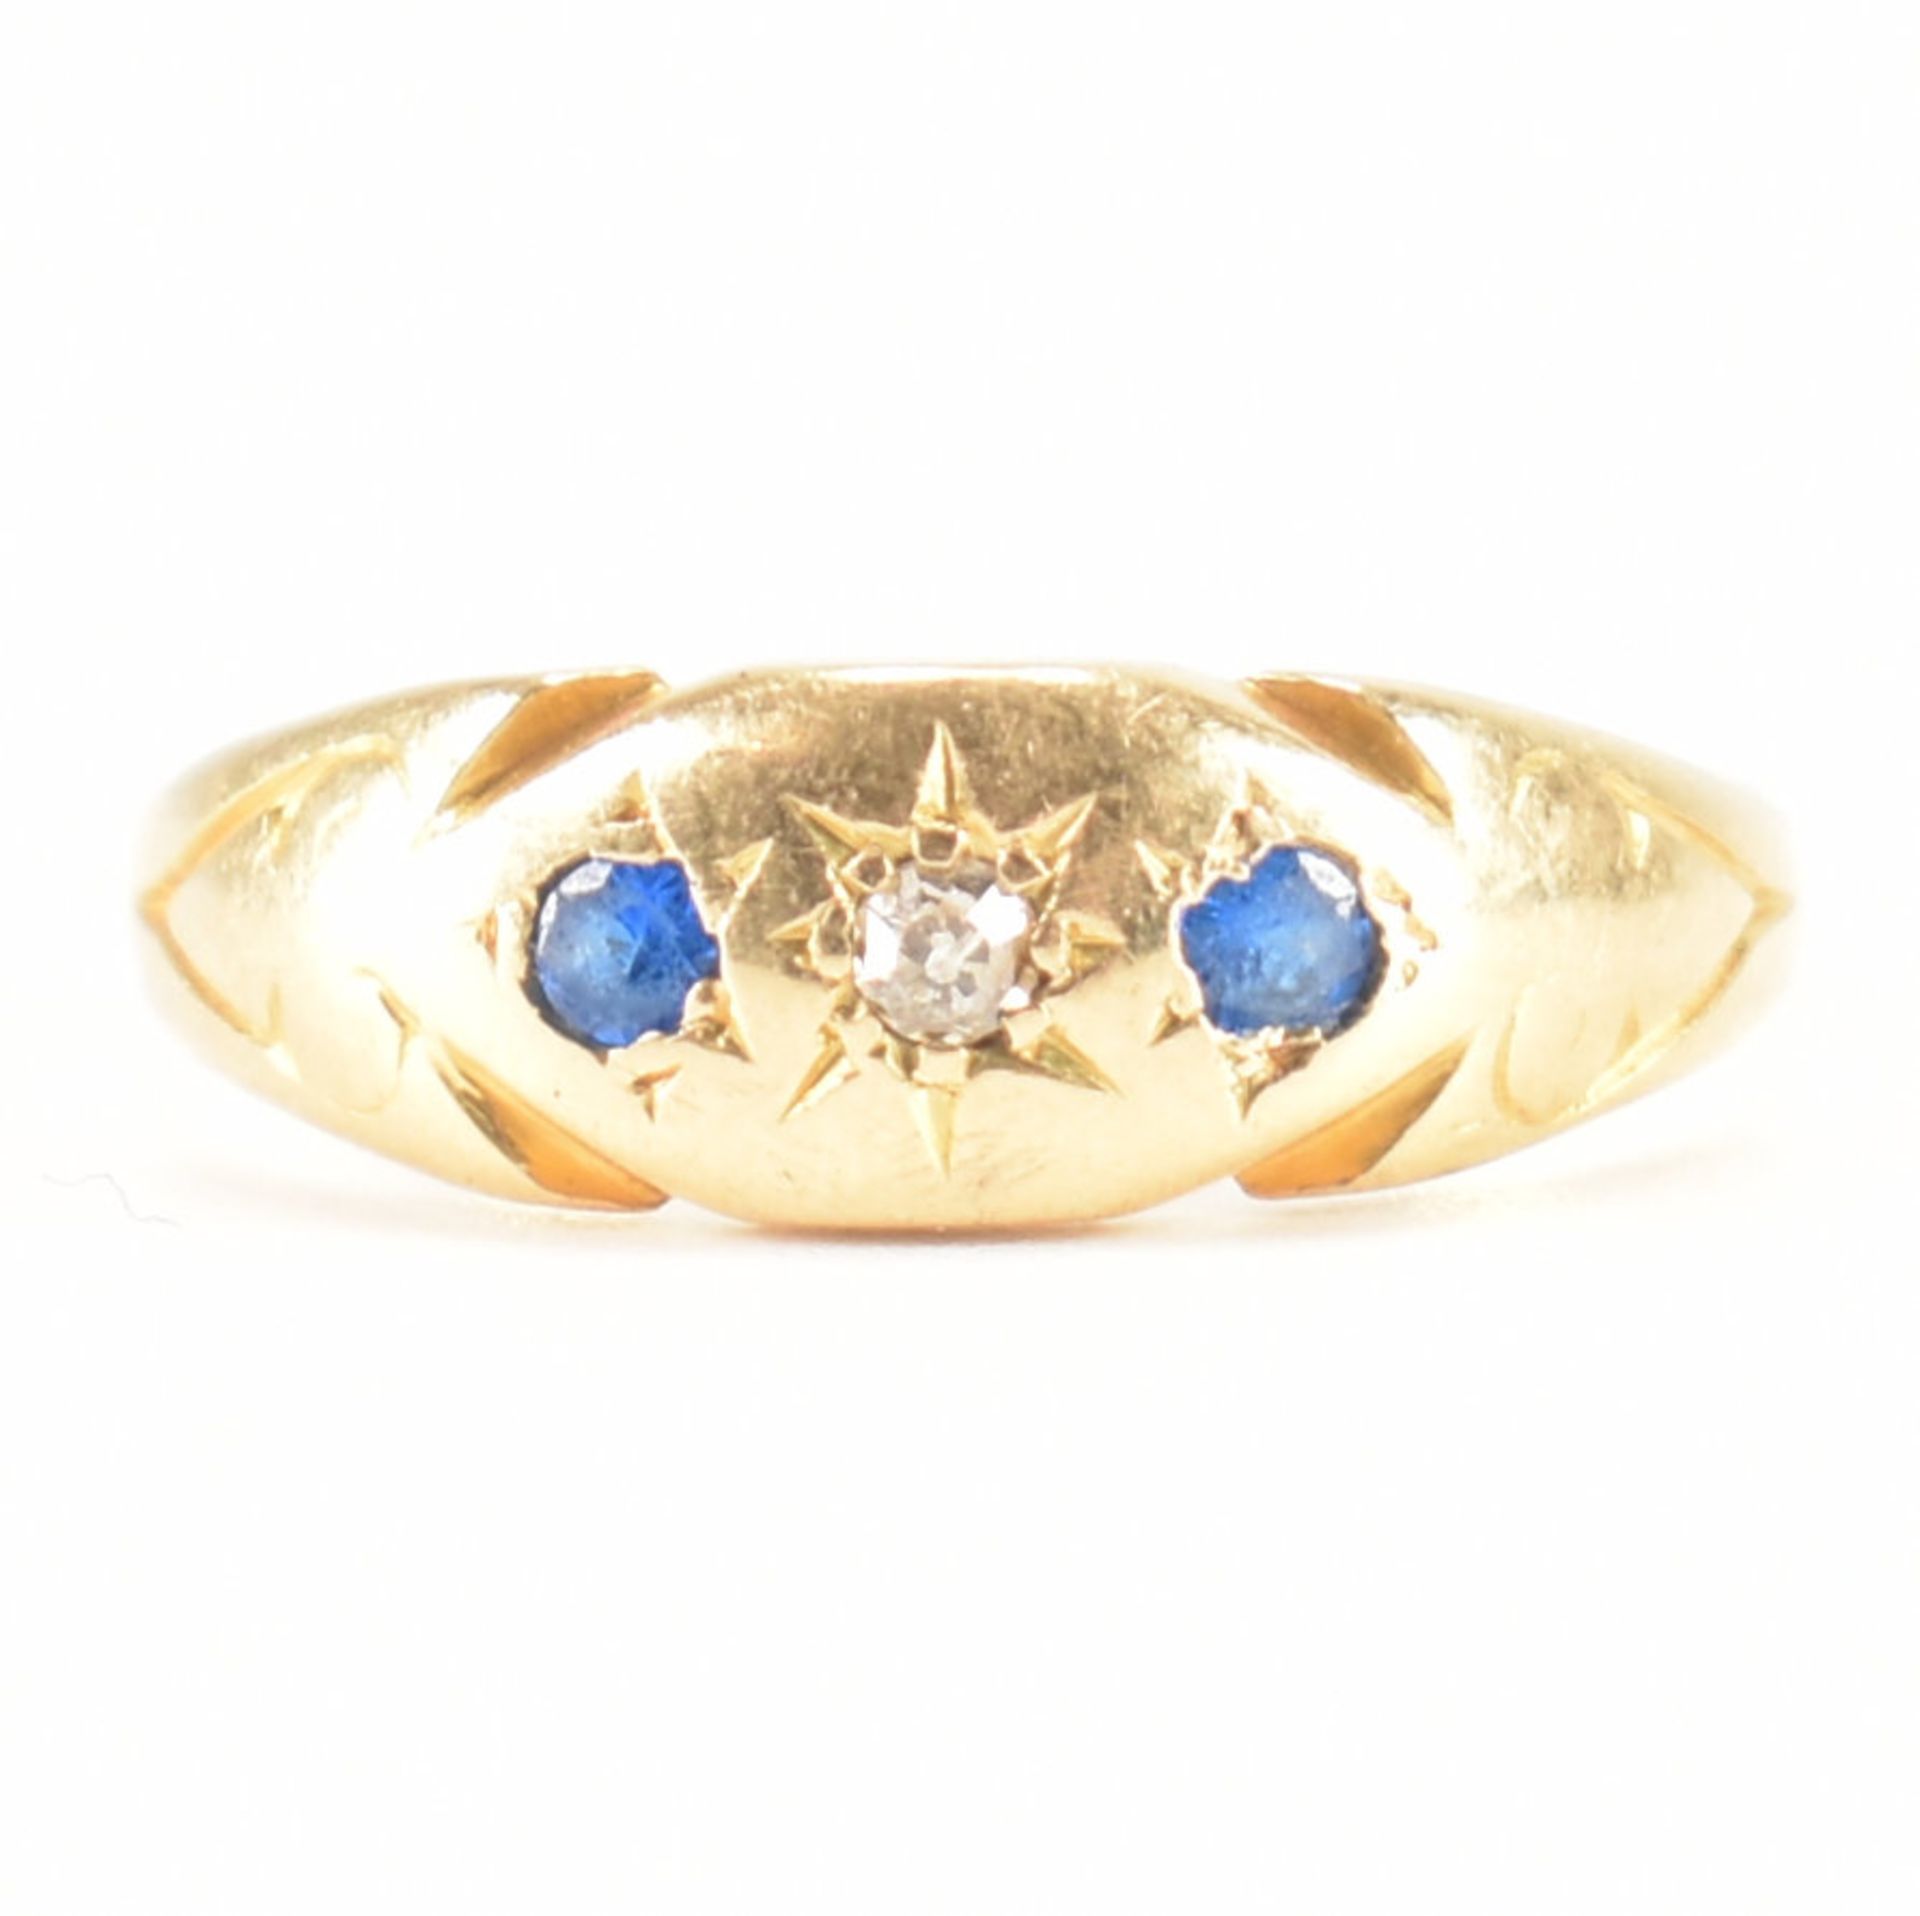 HALLMARKED 18CT GOLD DIAMOND & BLUE STONE RING